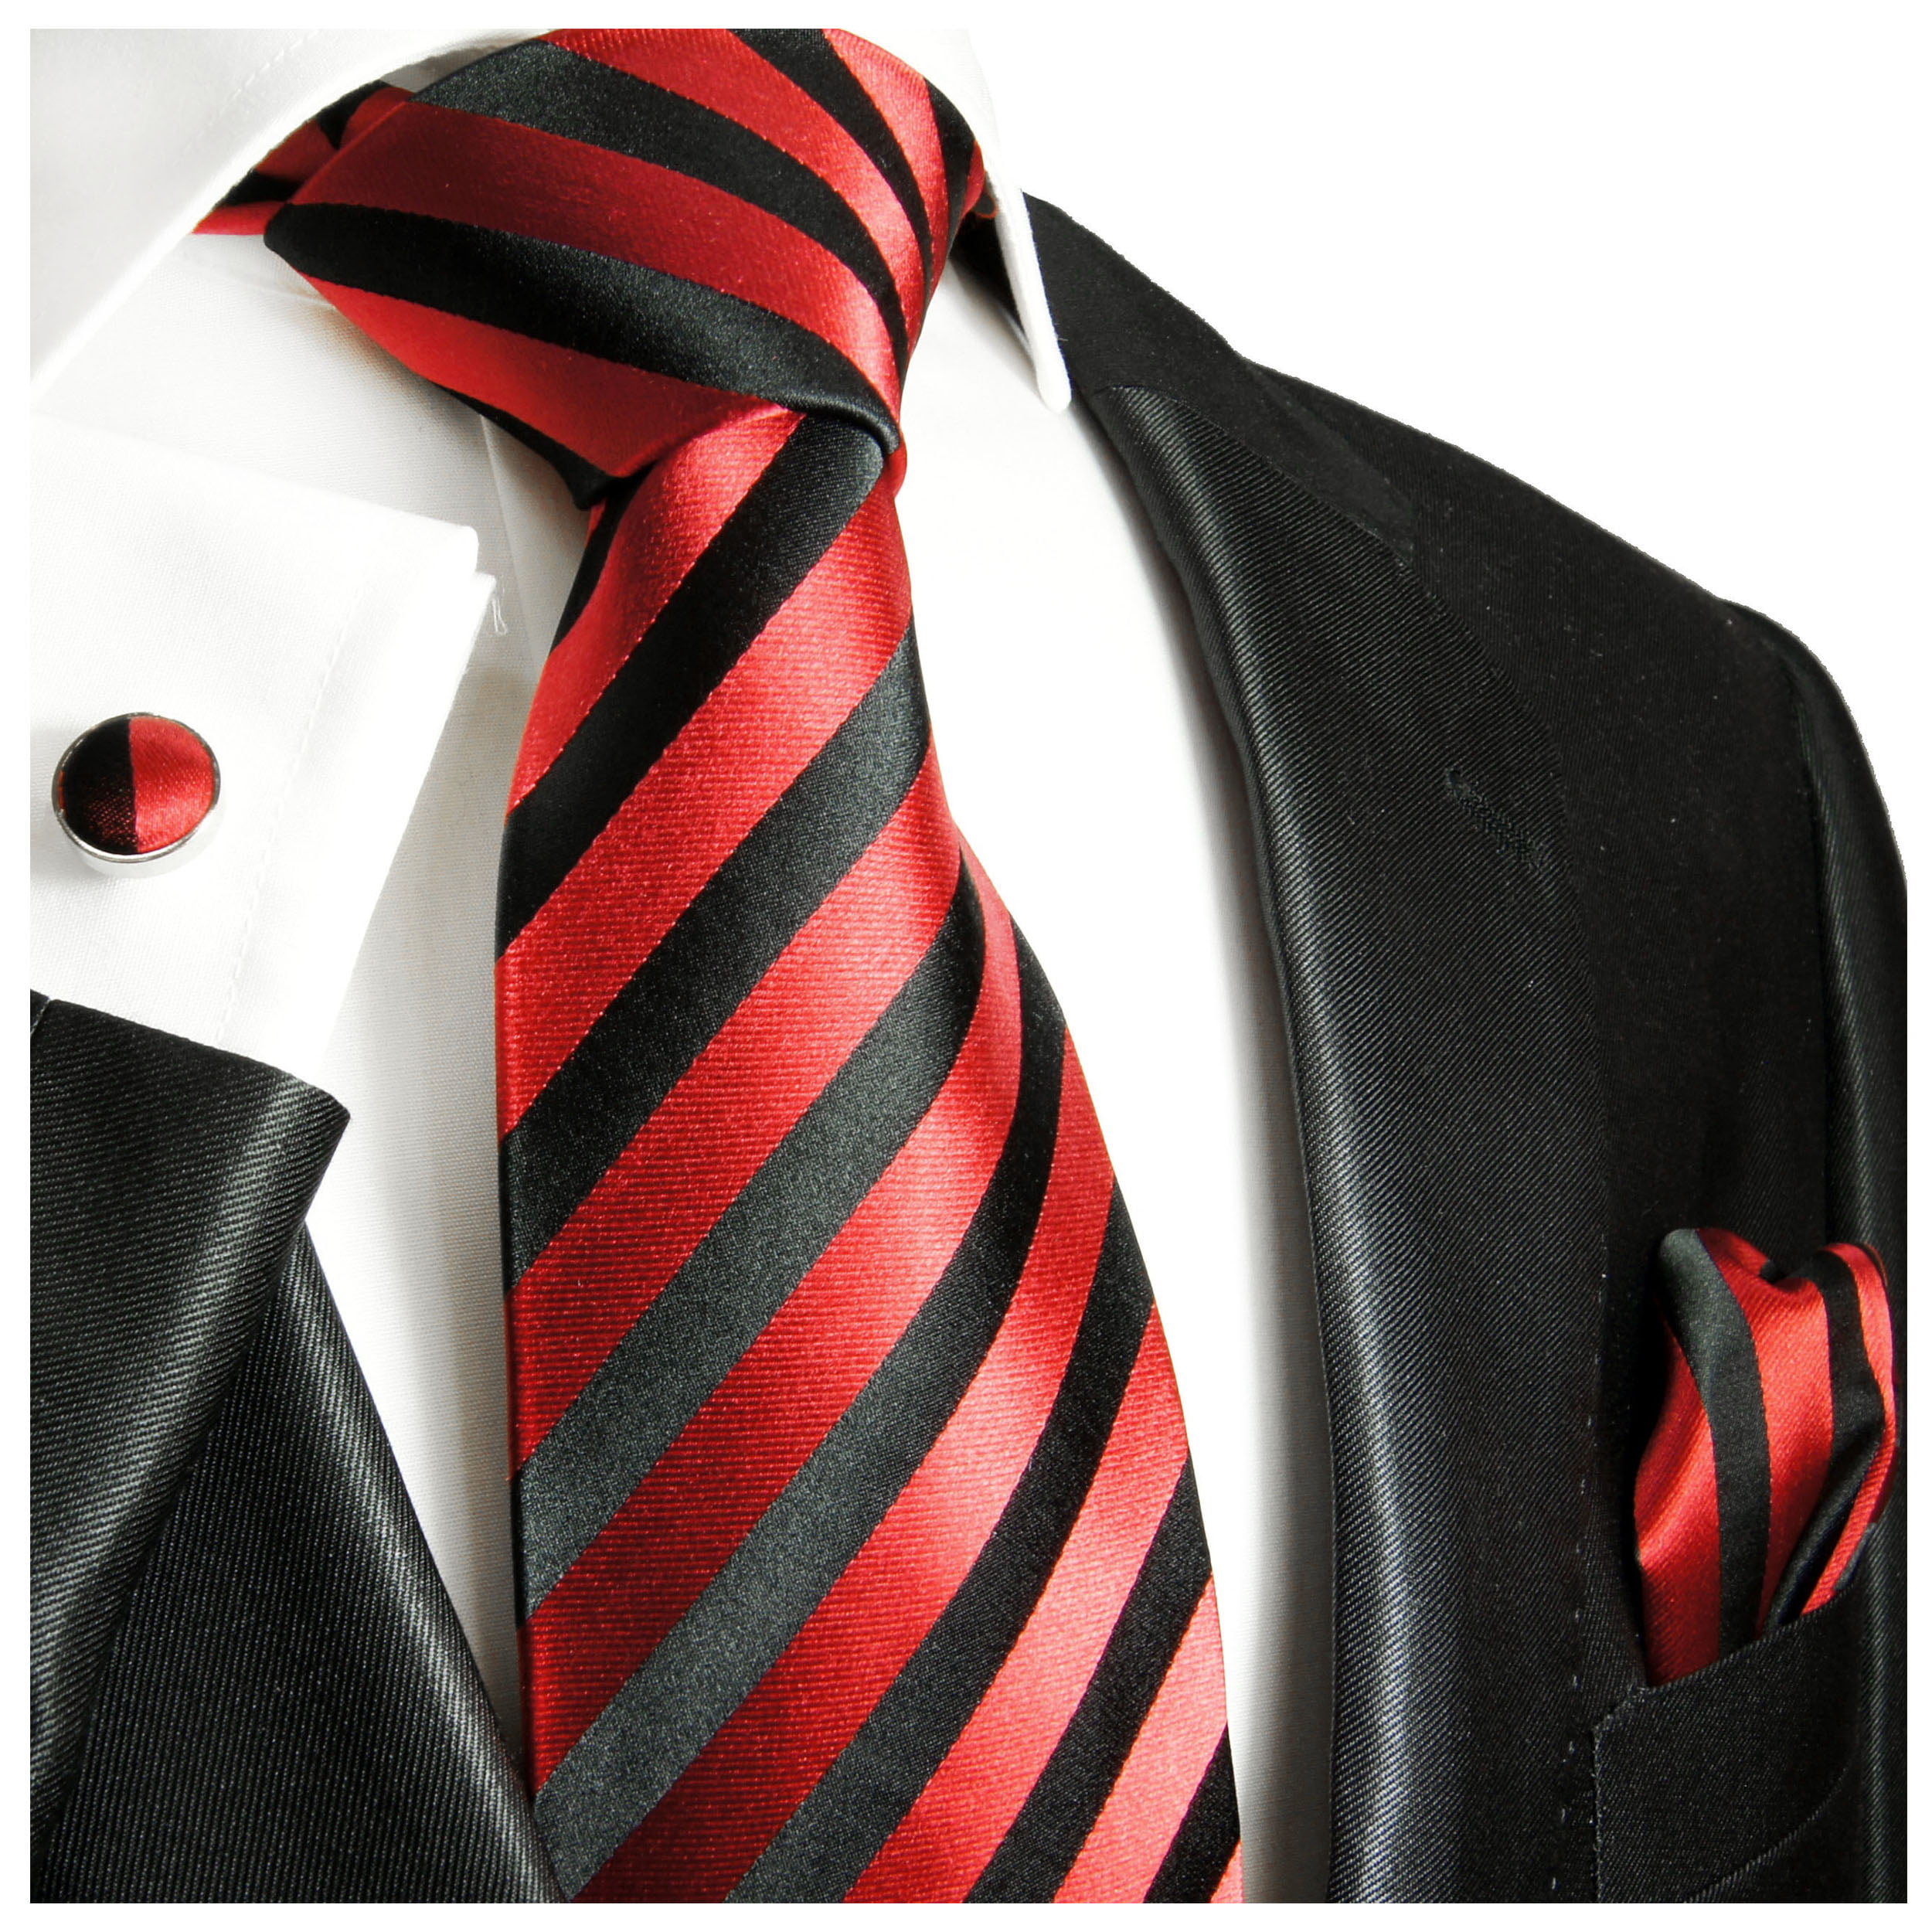 Classic Thin Striped Woven Mens Tie Necktie w/Pocket Square & Cufflinks Gift Set